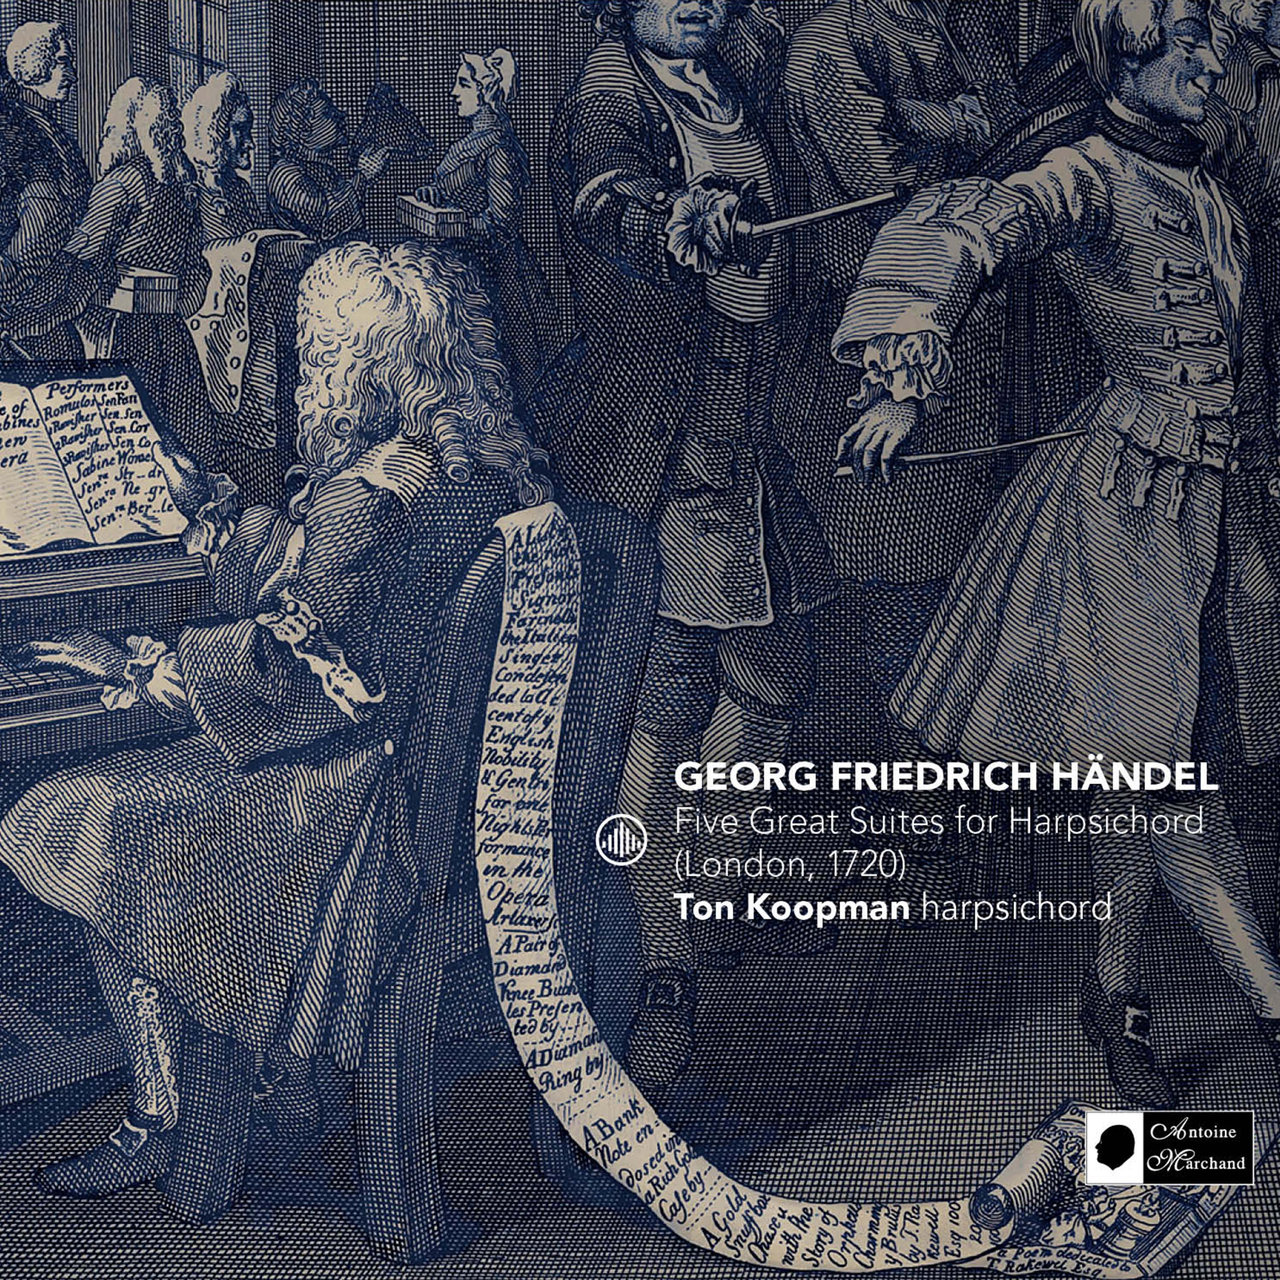 Handel - Five Great Suites for Harpsichord (London, 1720) - Ton Koopman